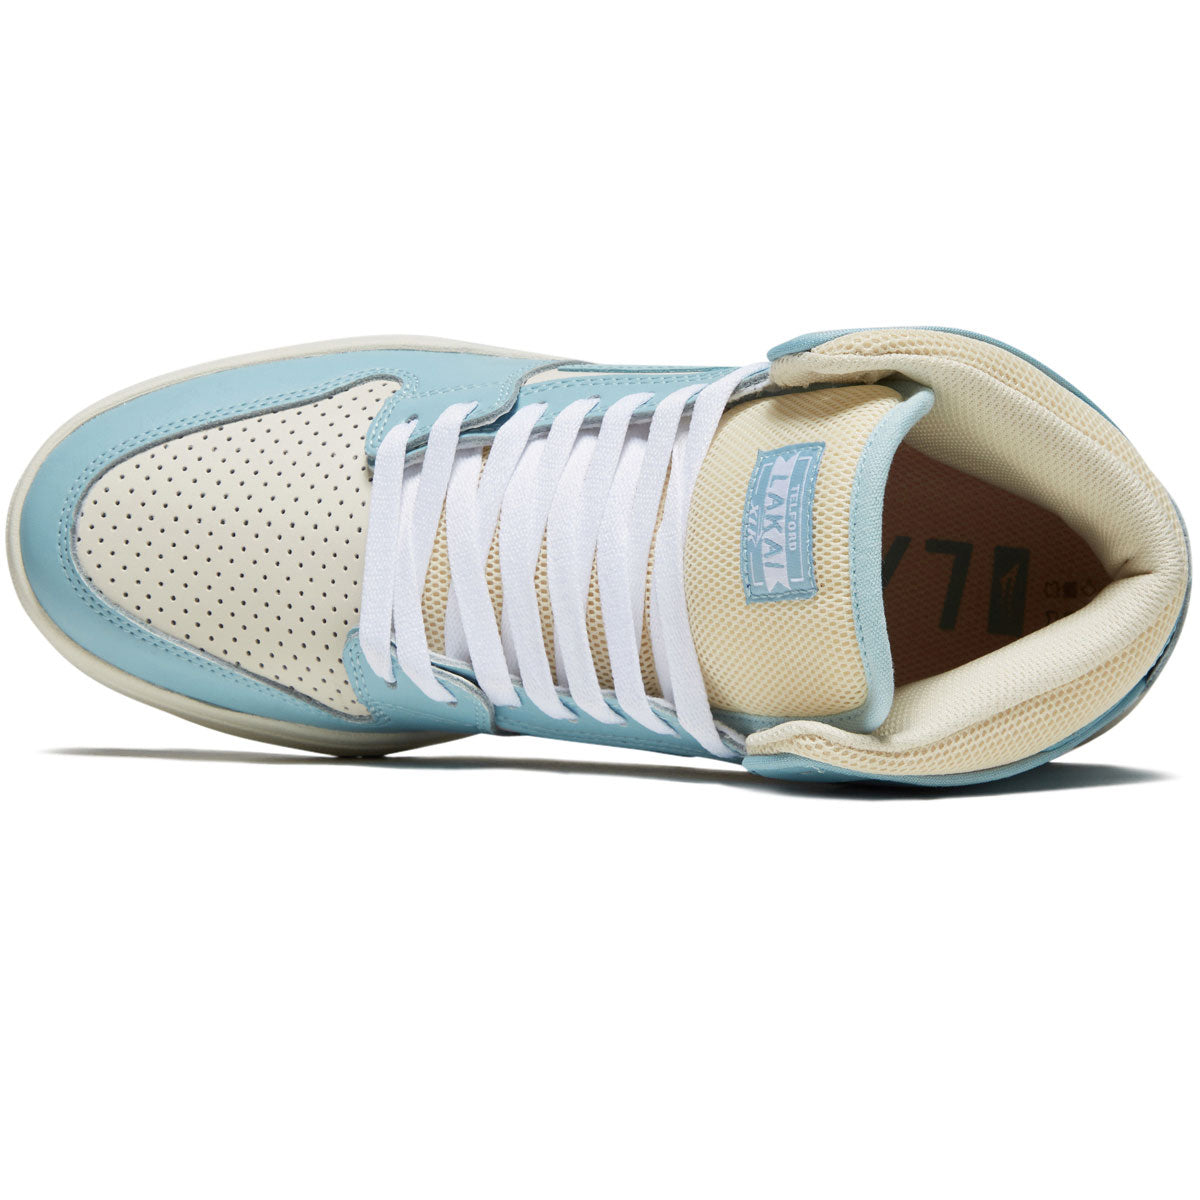 Lakai Telford Shoes - Light Blue/Cream Leather image 3